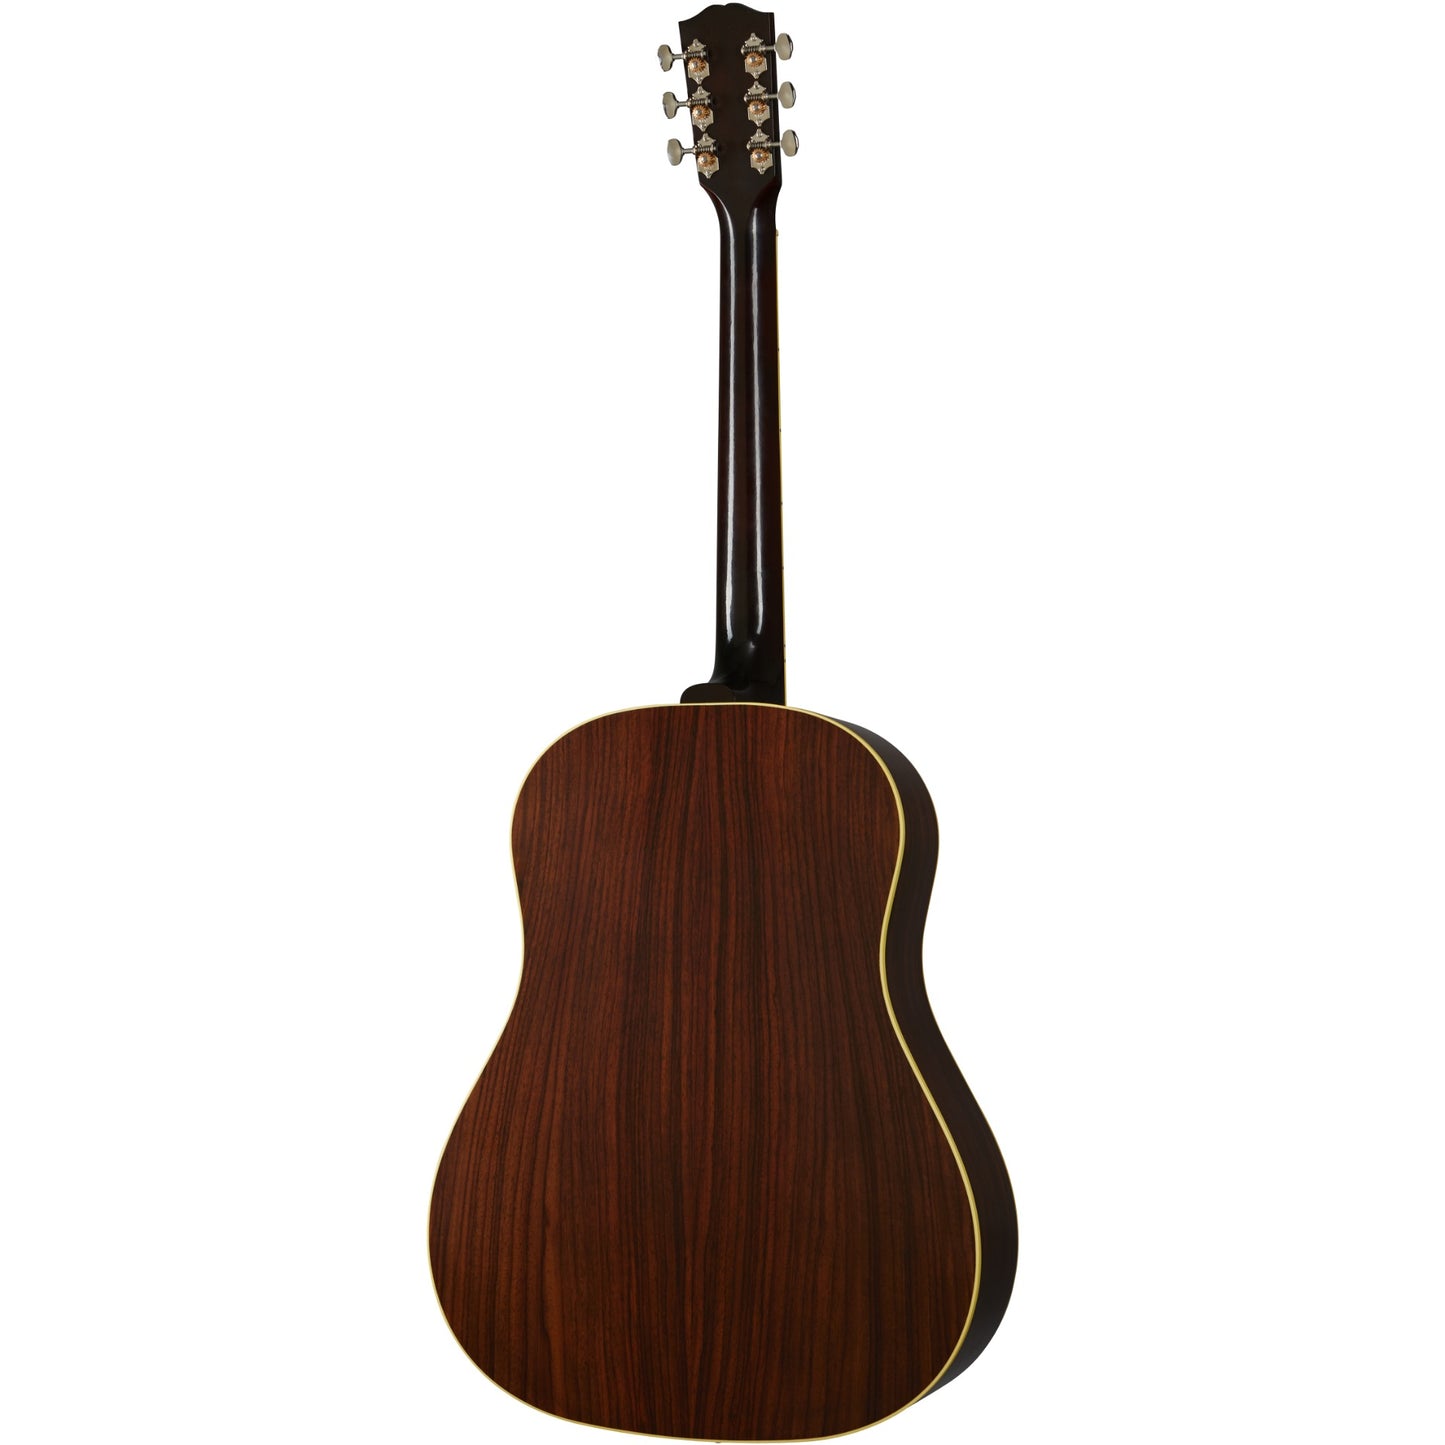 Gibson 1936 Advanced Jumbo Acoustic Guitar - Vintage Sunburst